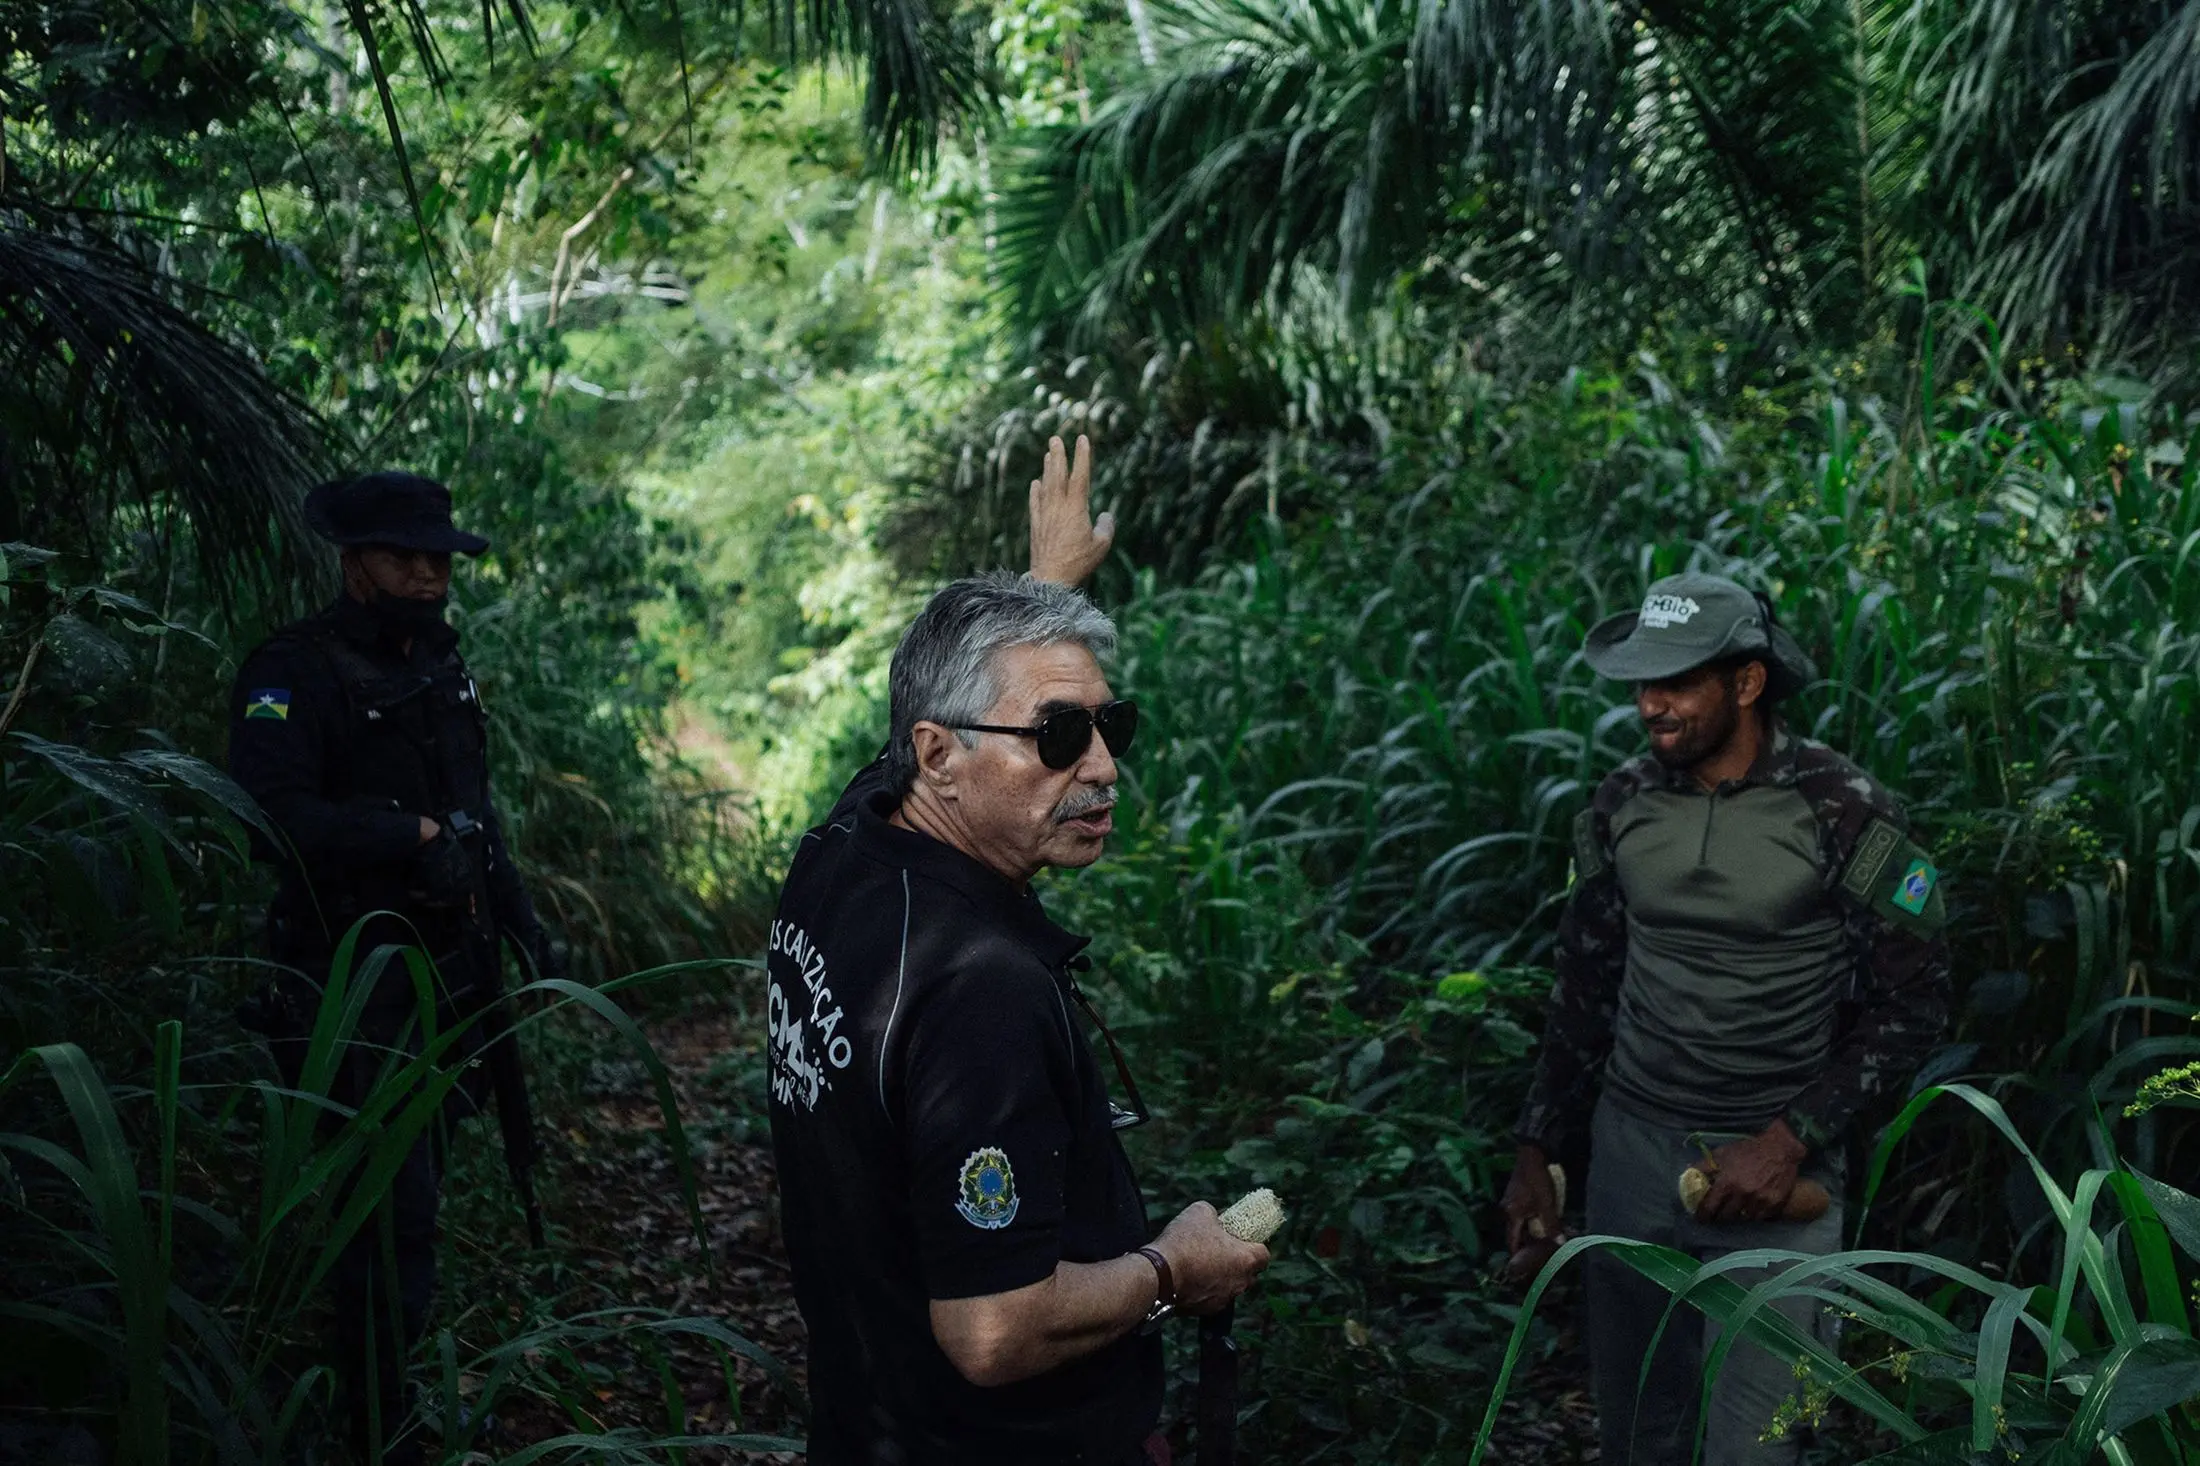 A man patrols area of rainforest